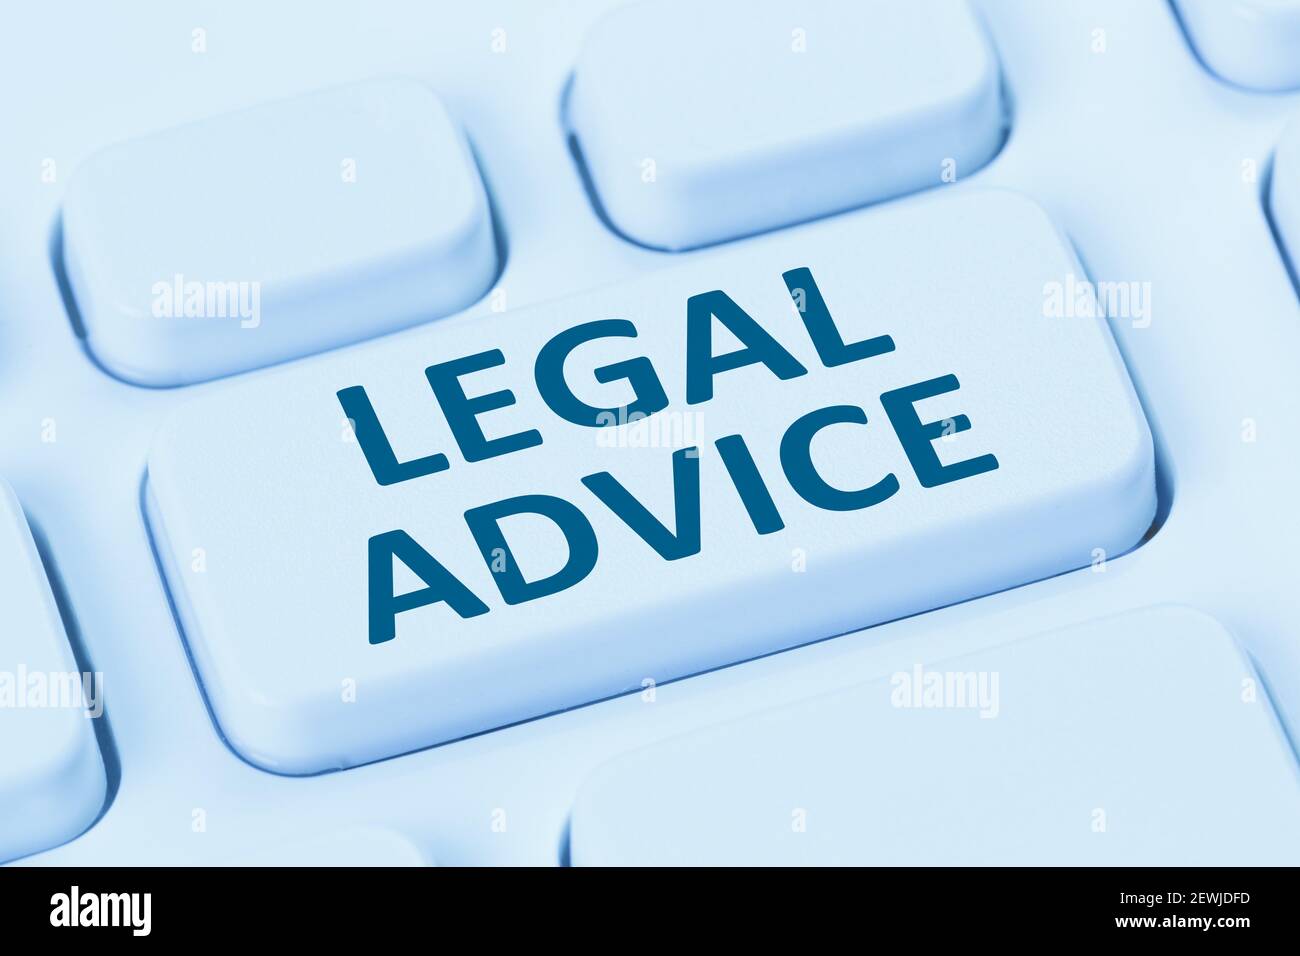 Legal advice compliance ecommerce ecom consultation information info company internet computer keyboard. Stock Photo